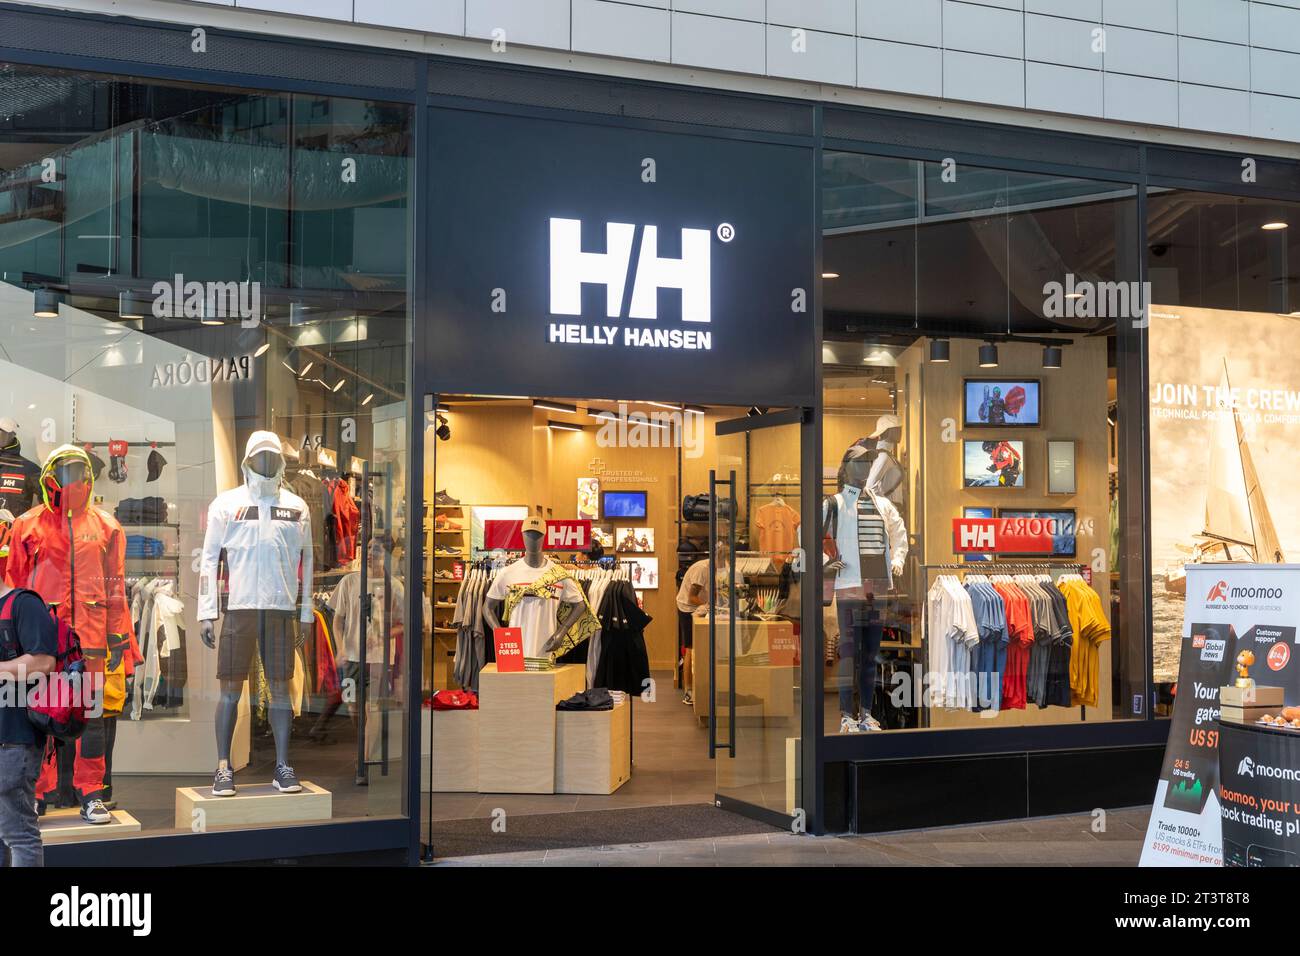 Helly Hansen London Stores